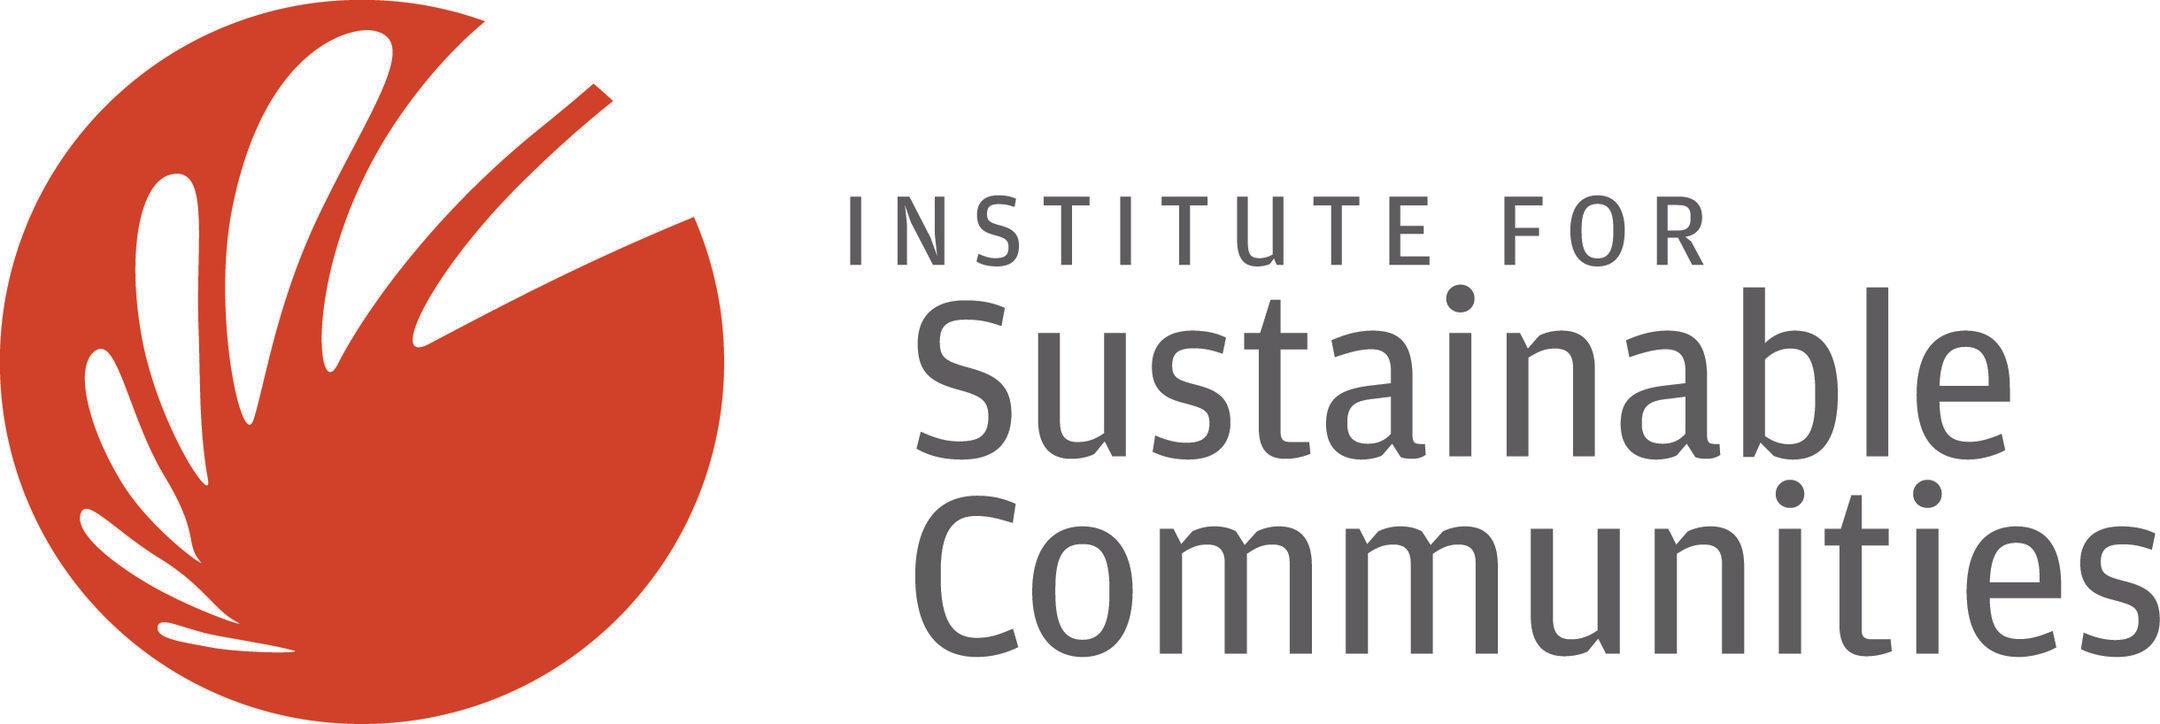 institute-for-sustainable-communities_processed_66b93317de0ac03a1afe3d17db4e7bed836a0d86d7dbc3f897555538deb8c5be_logo.jpg